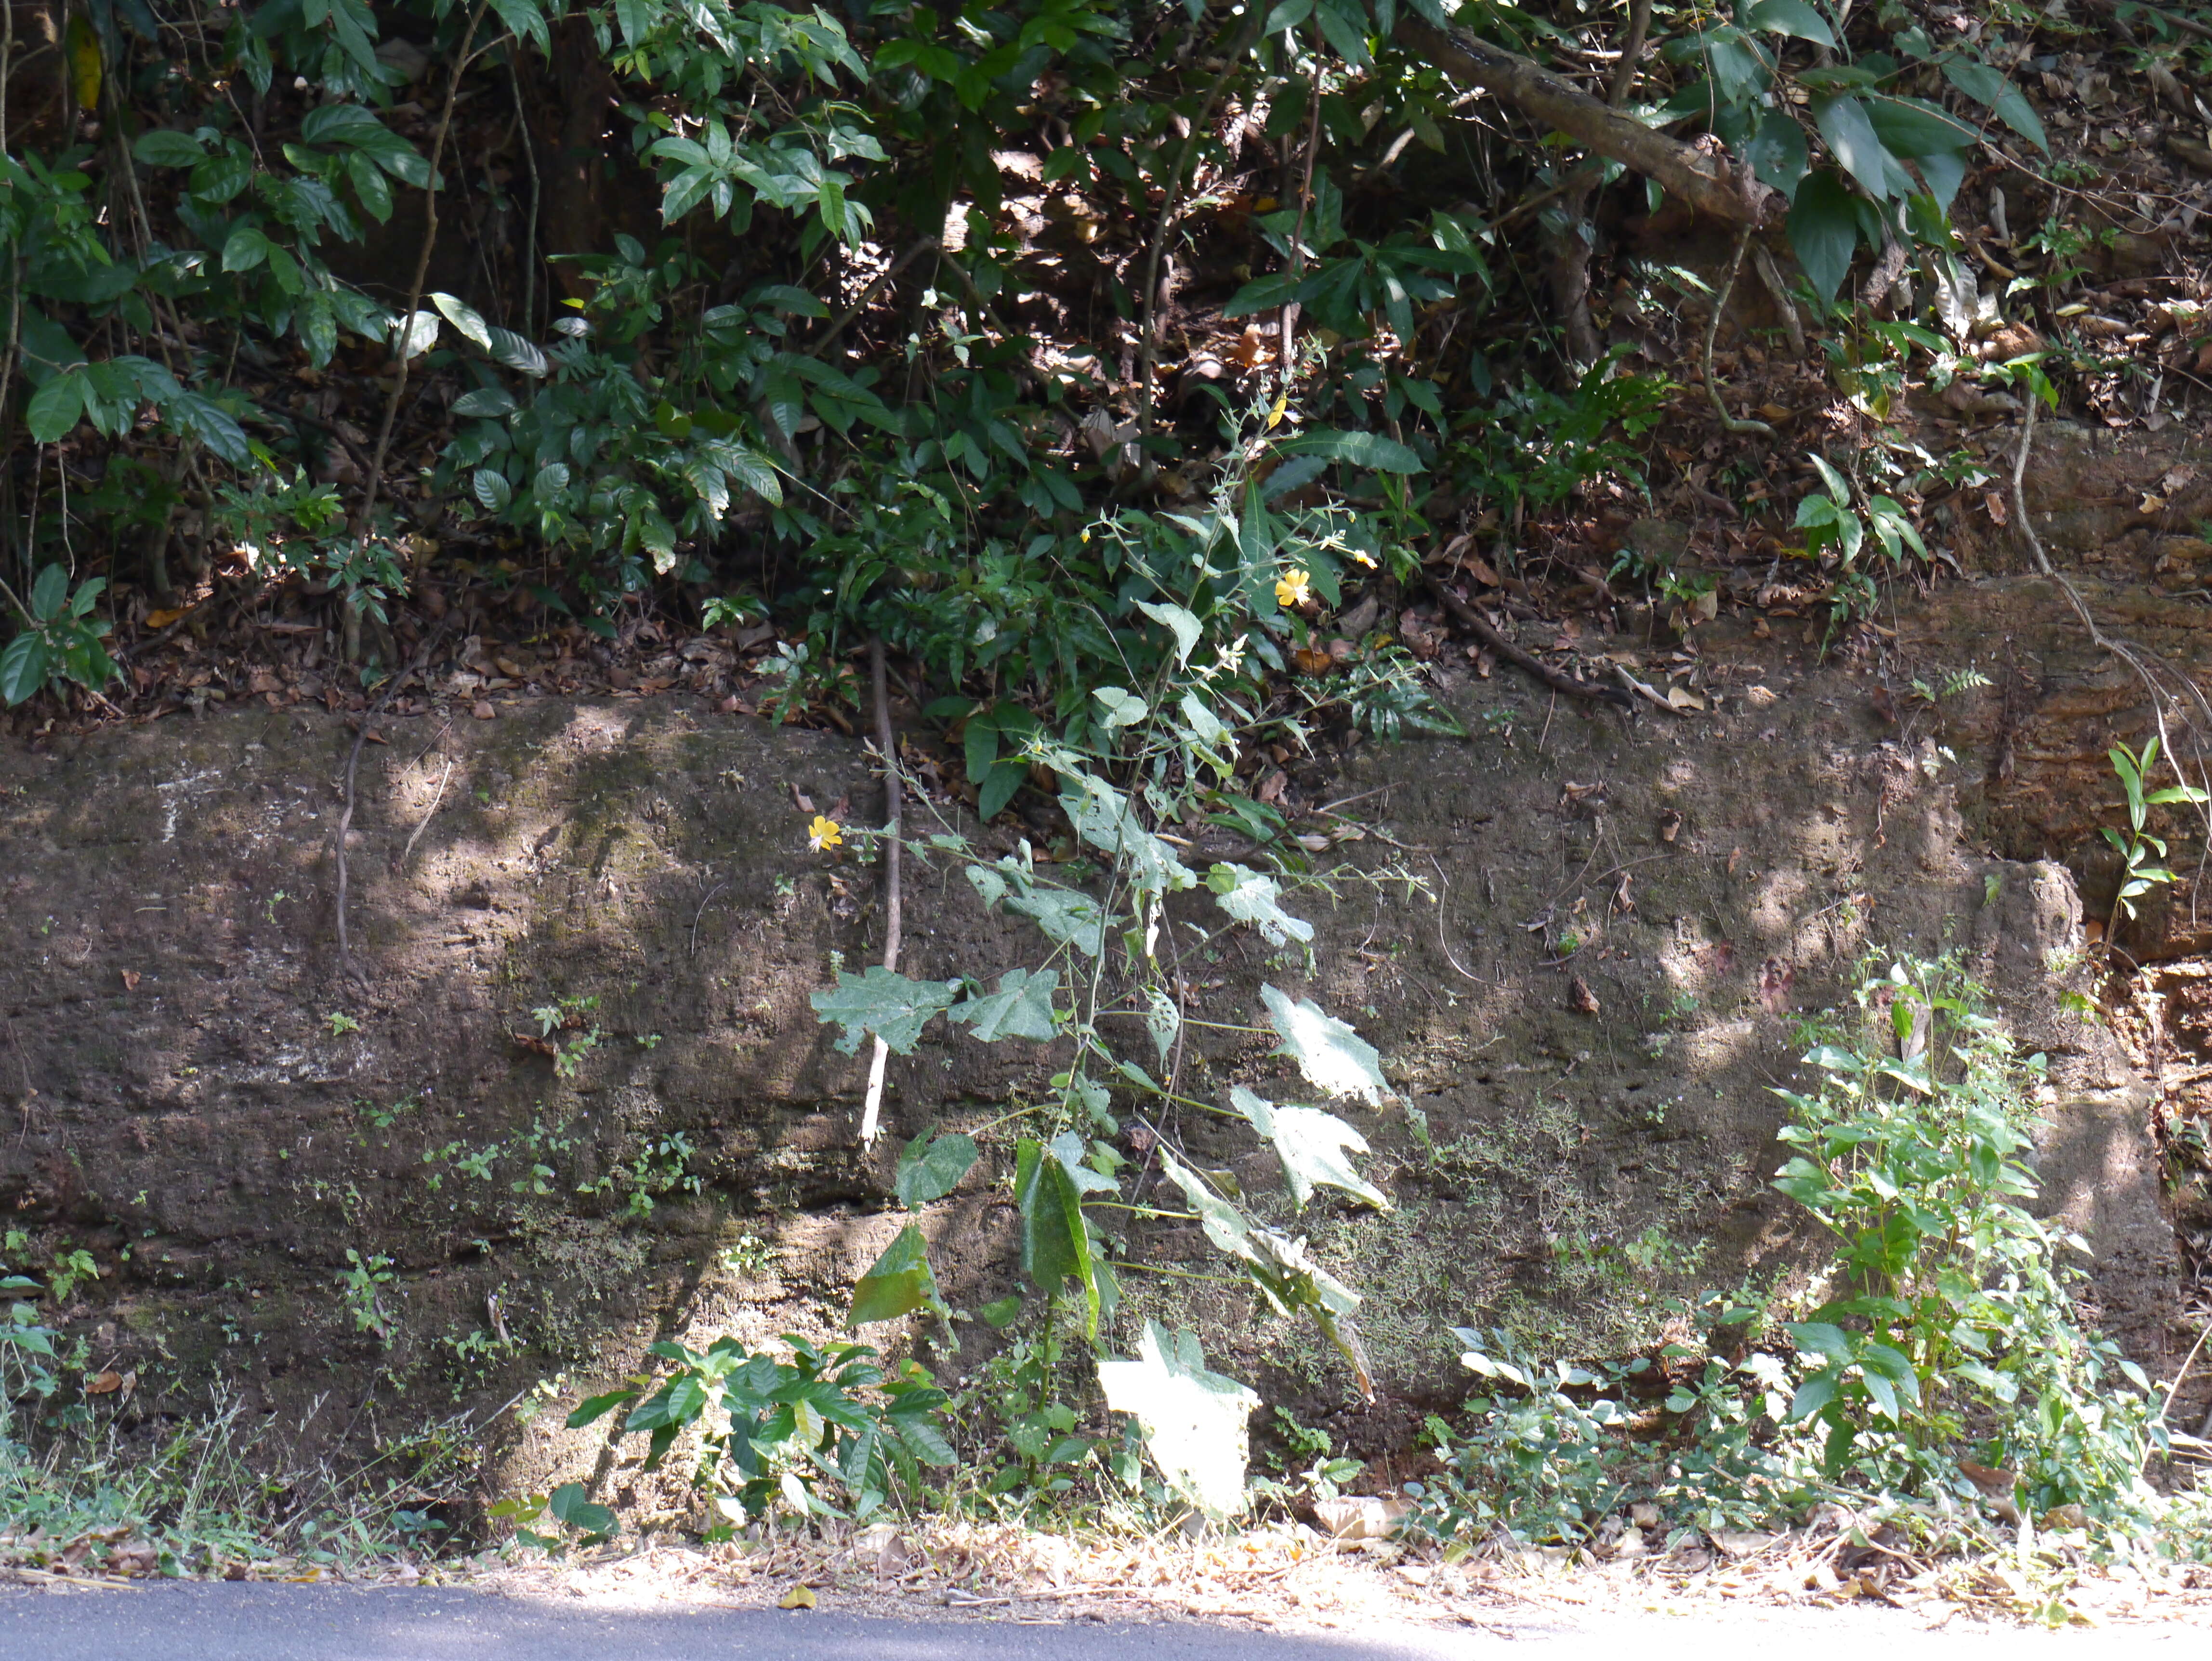 Image of Abutilon persicum (Burm. fil.) Merr.